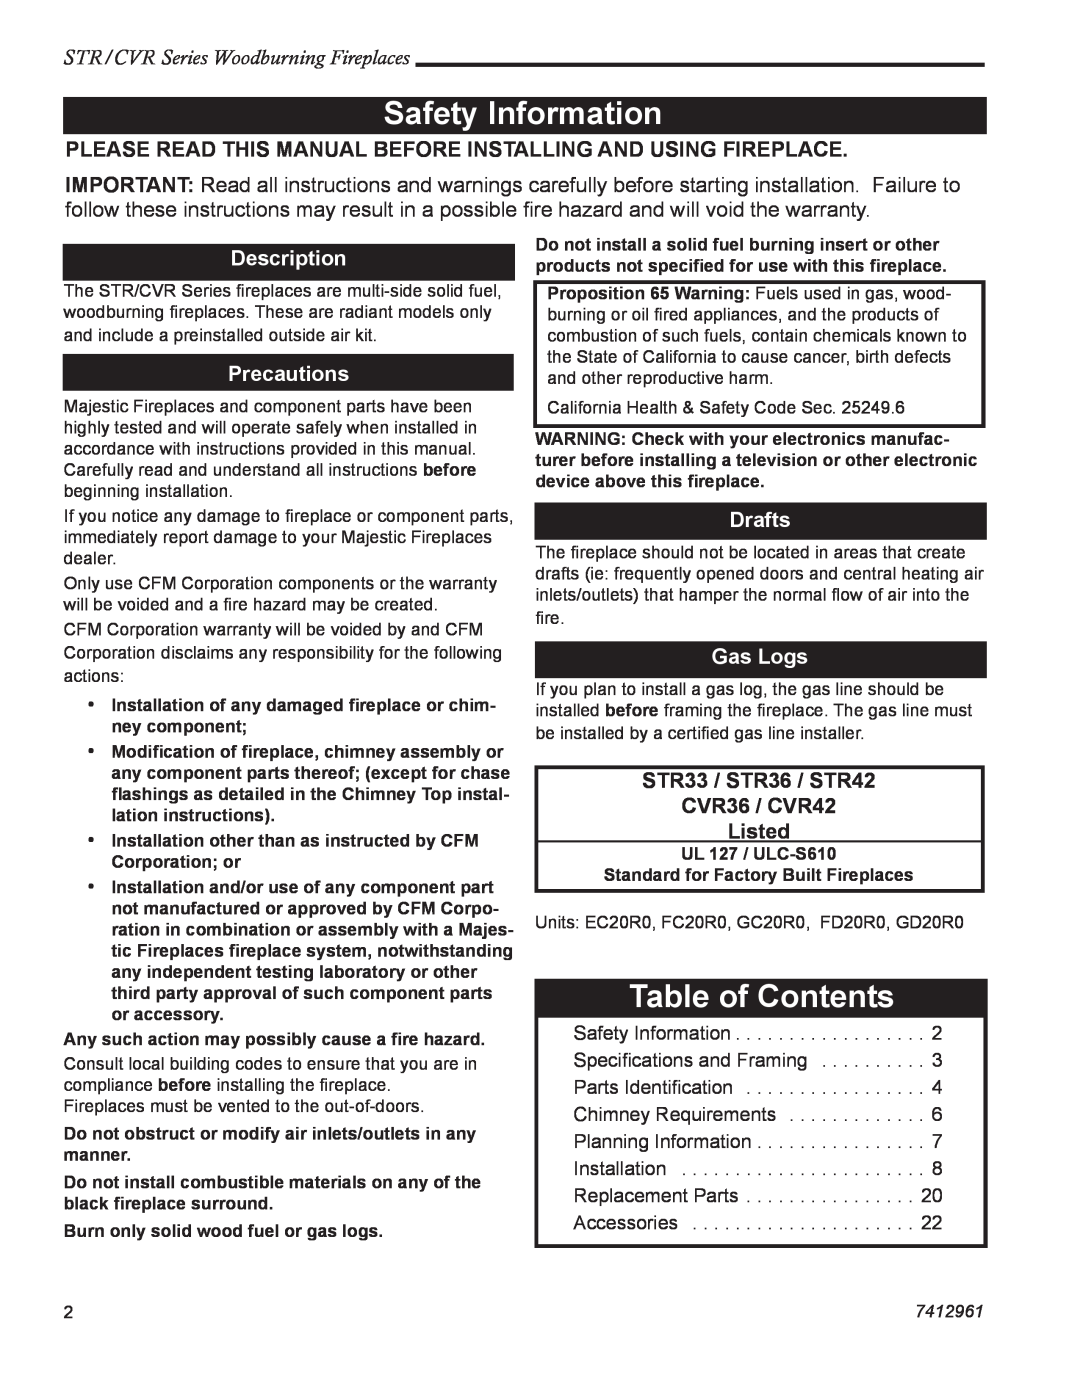 Vermont Casting STR36 Safety Information, Table of Contents, STR/CVR Series Woodburning Fireplaces, Description, Drafts 